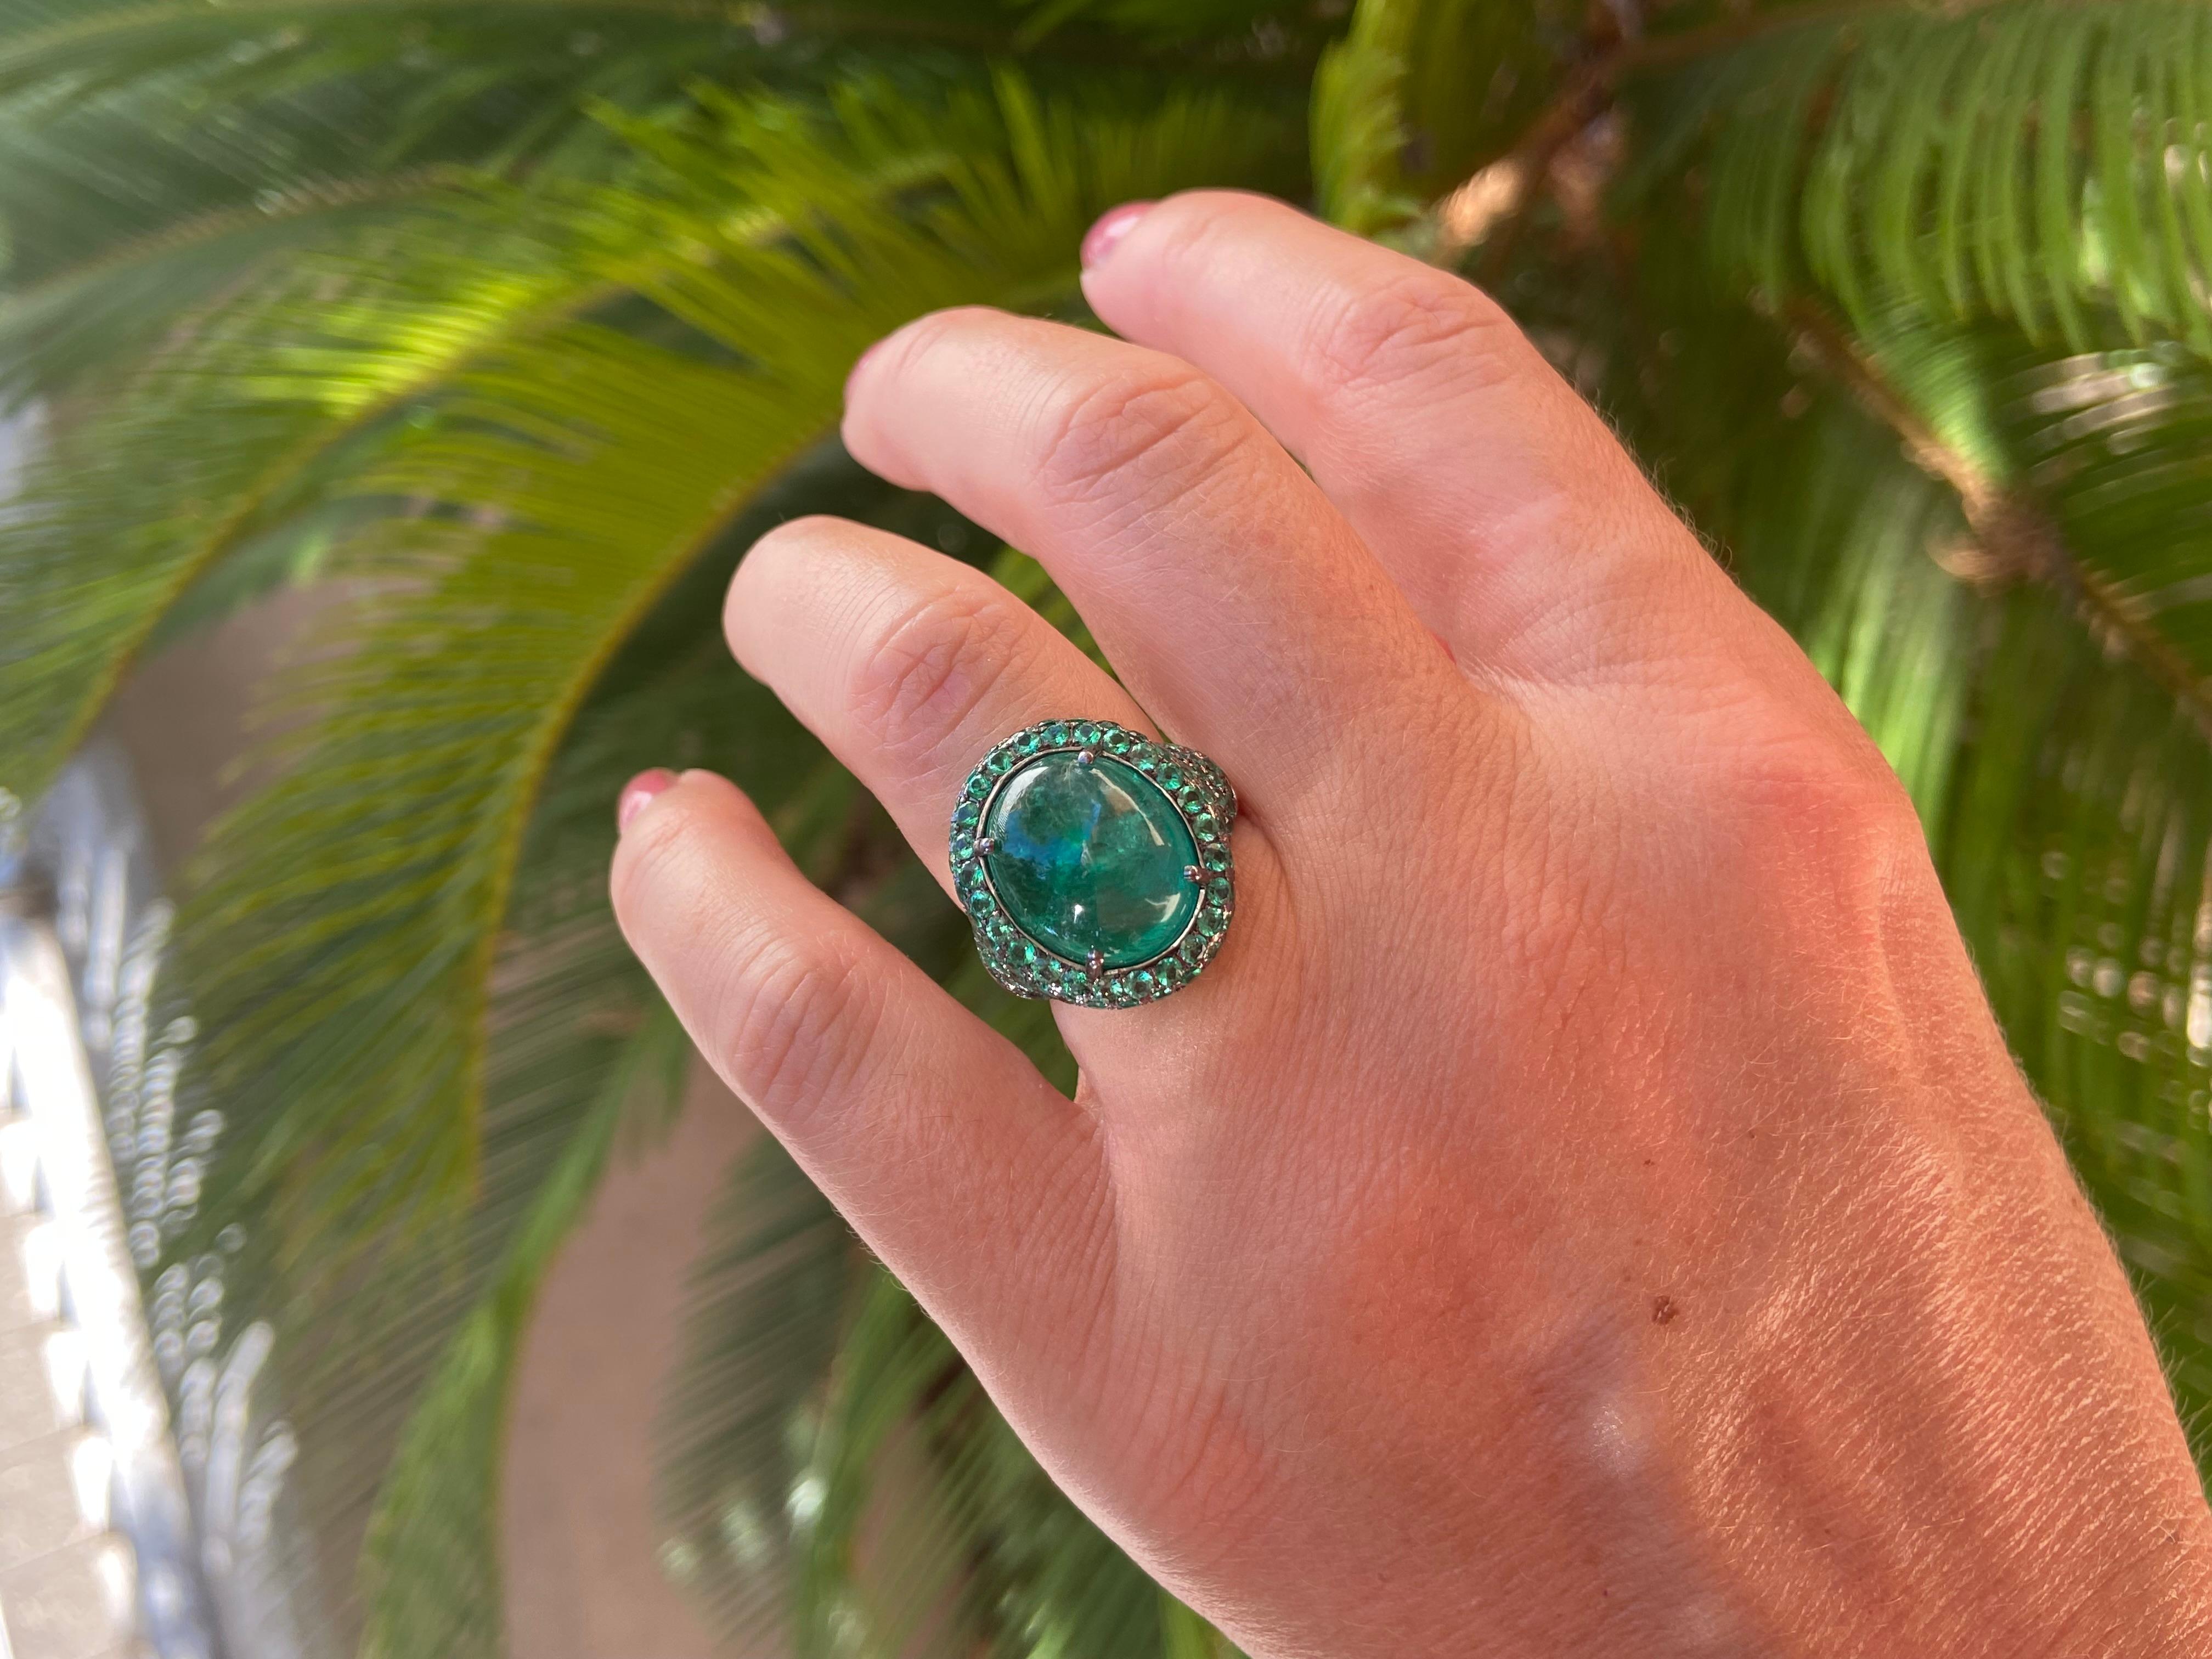  AIG Certified 10 Carat Zambian Emerald 18K Gold Ring For Sale 6